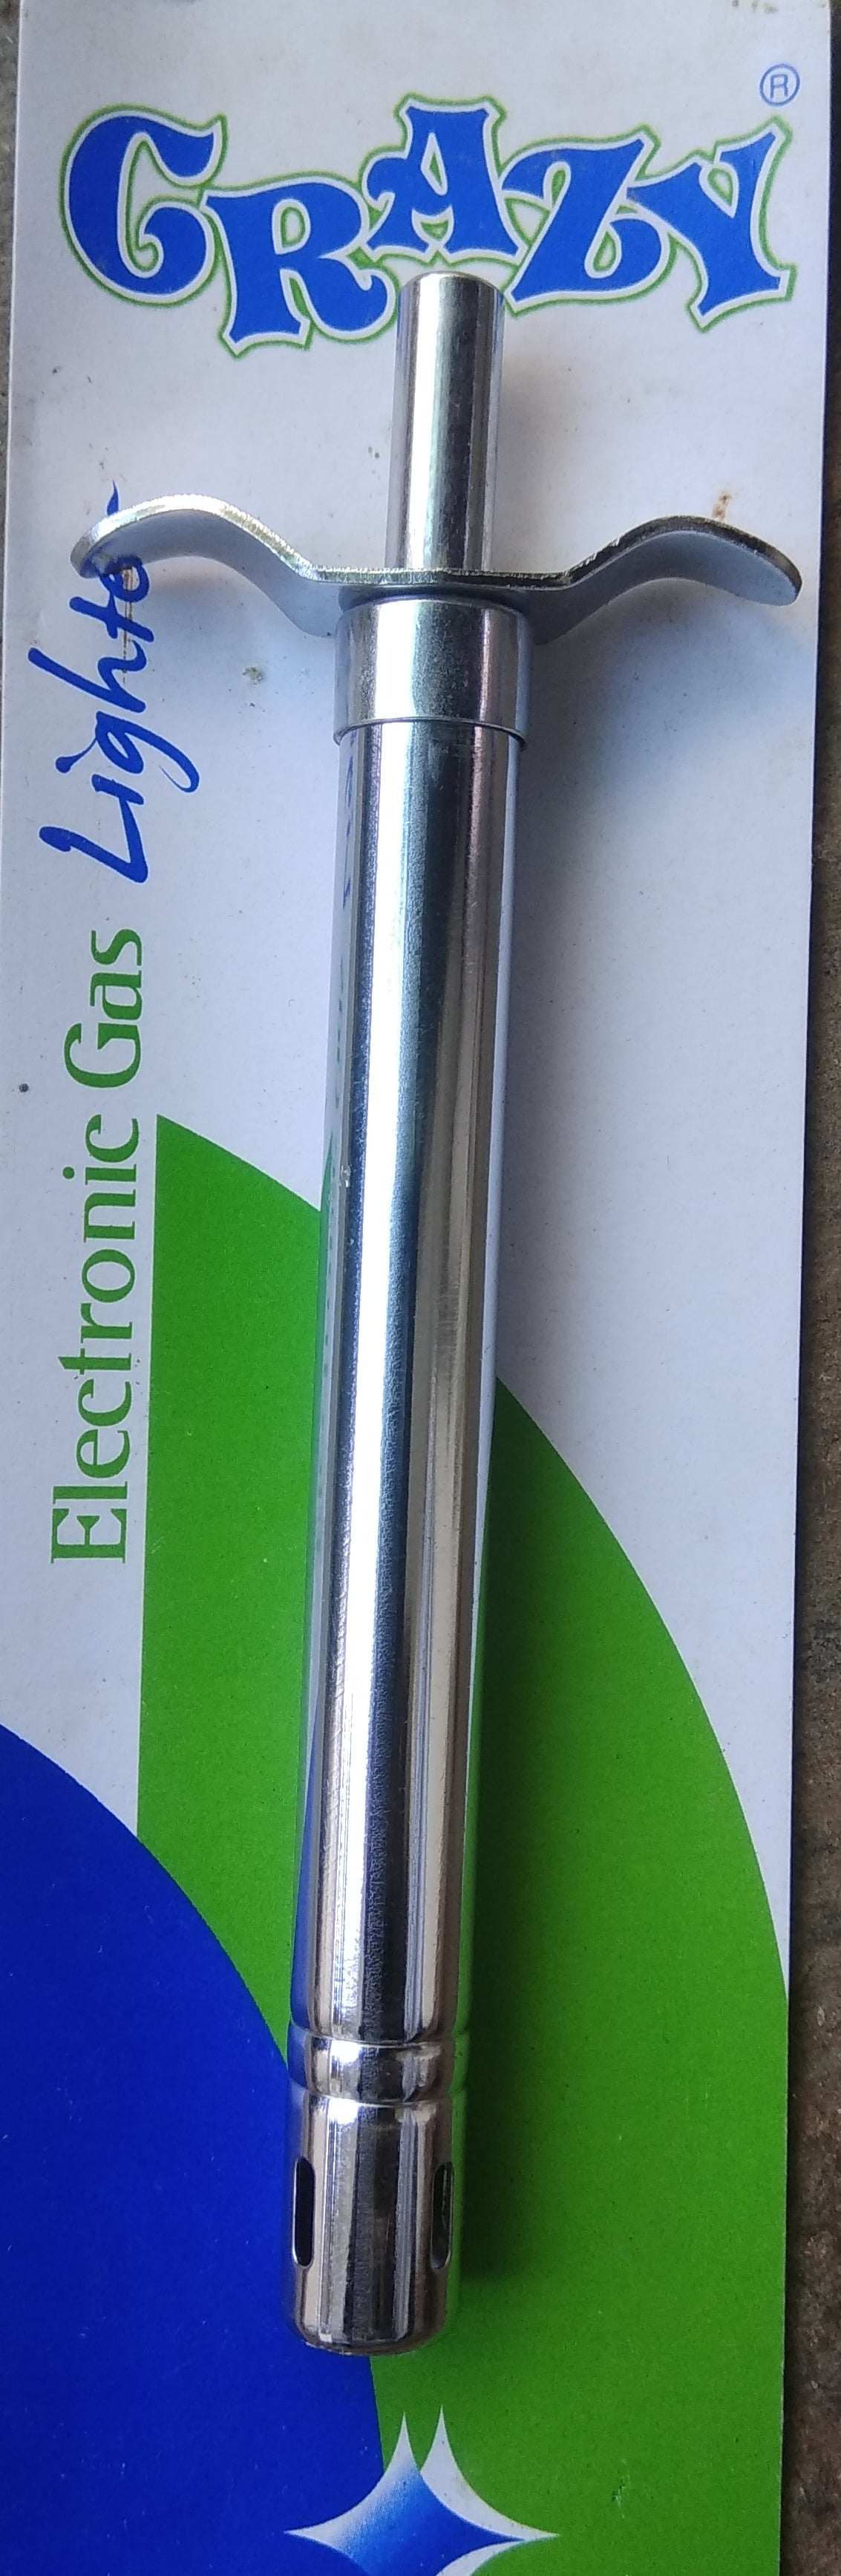 3 PCs Stainless Steel Lighter for Gas Stove, Knife, Vegetable Sleever